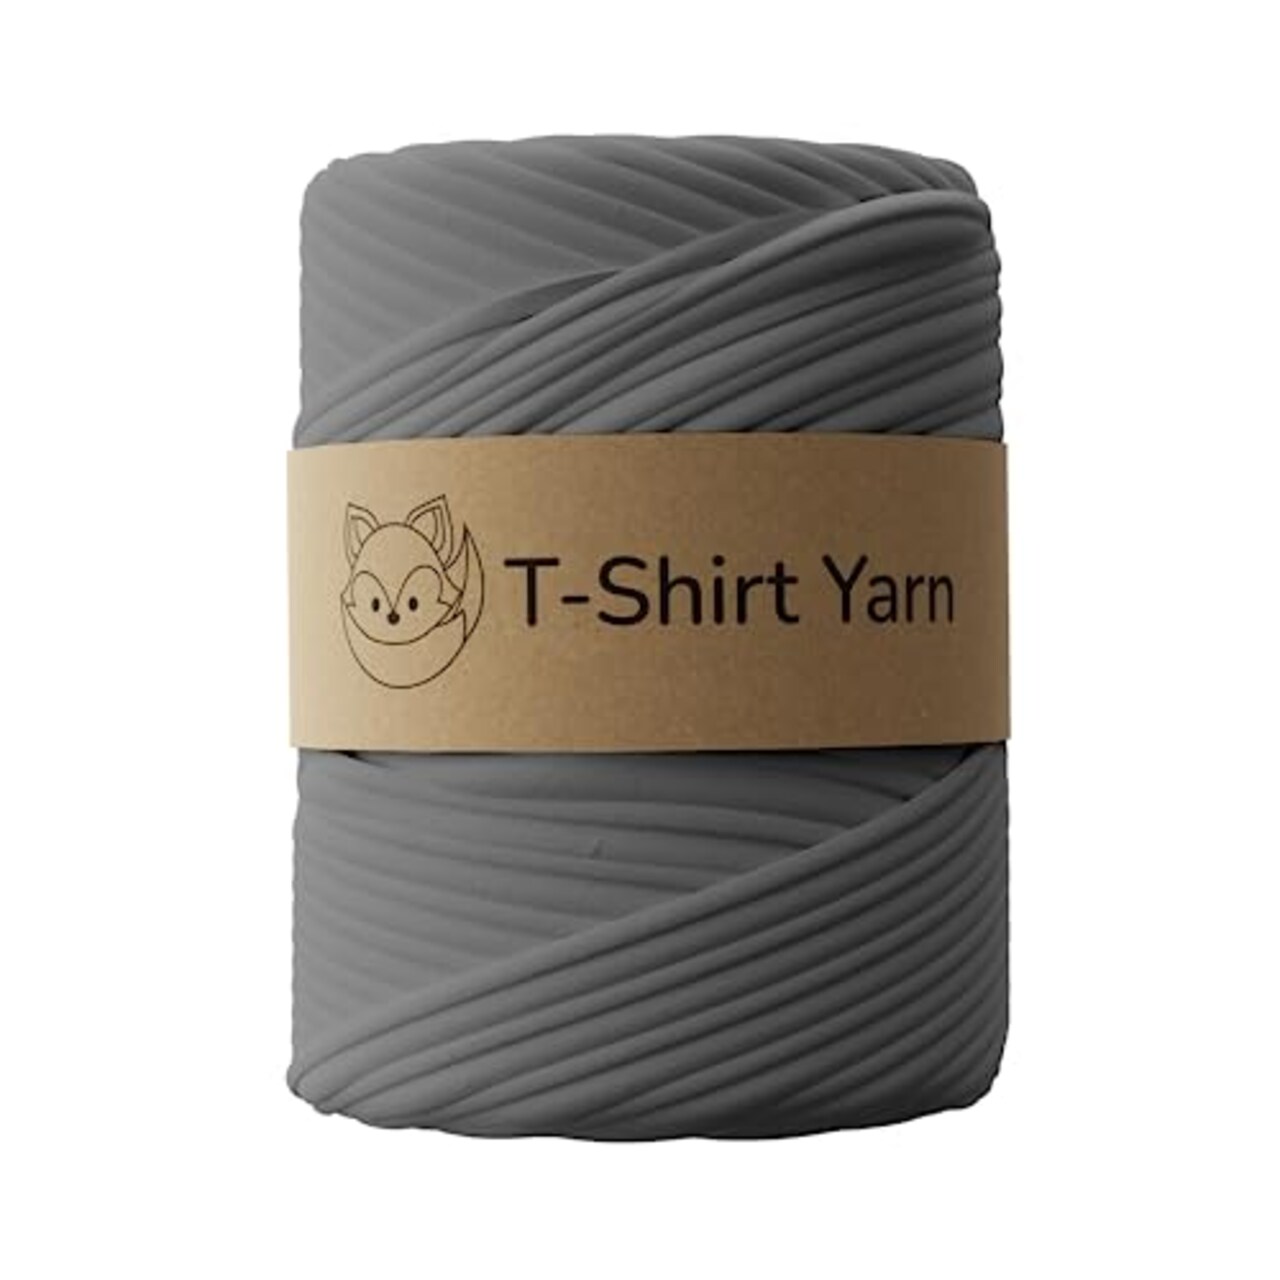 T-Shirt Yarn - Cotton Fettuccini Zpagetti - Sewing Knitting Crochet T-Shirt  Yarn - 100 Yards - Medium Grey